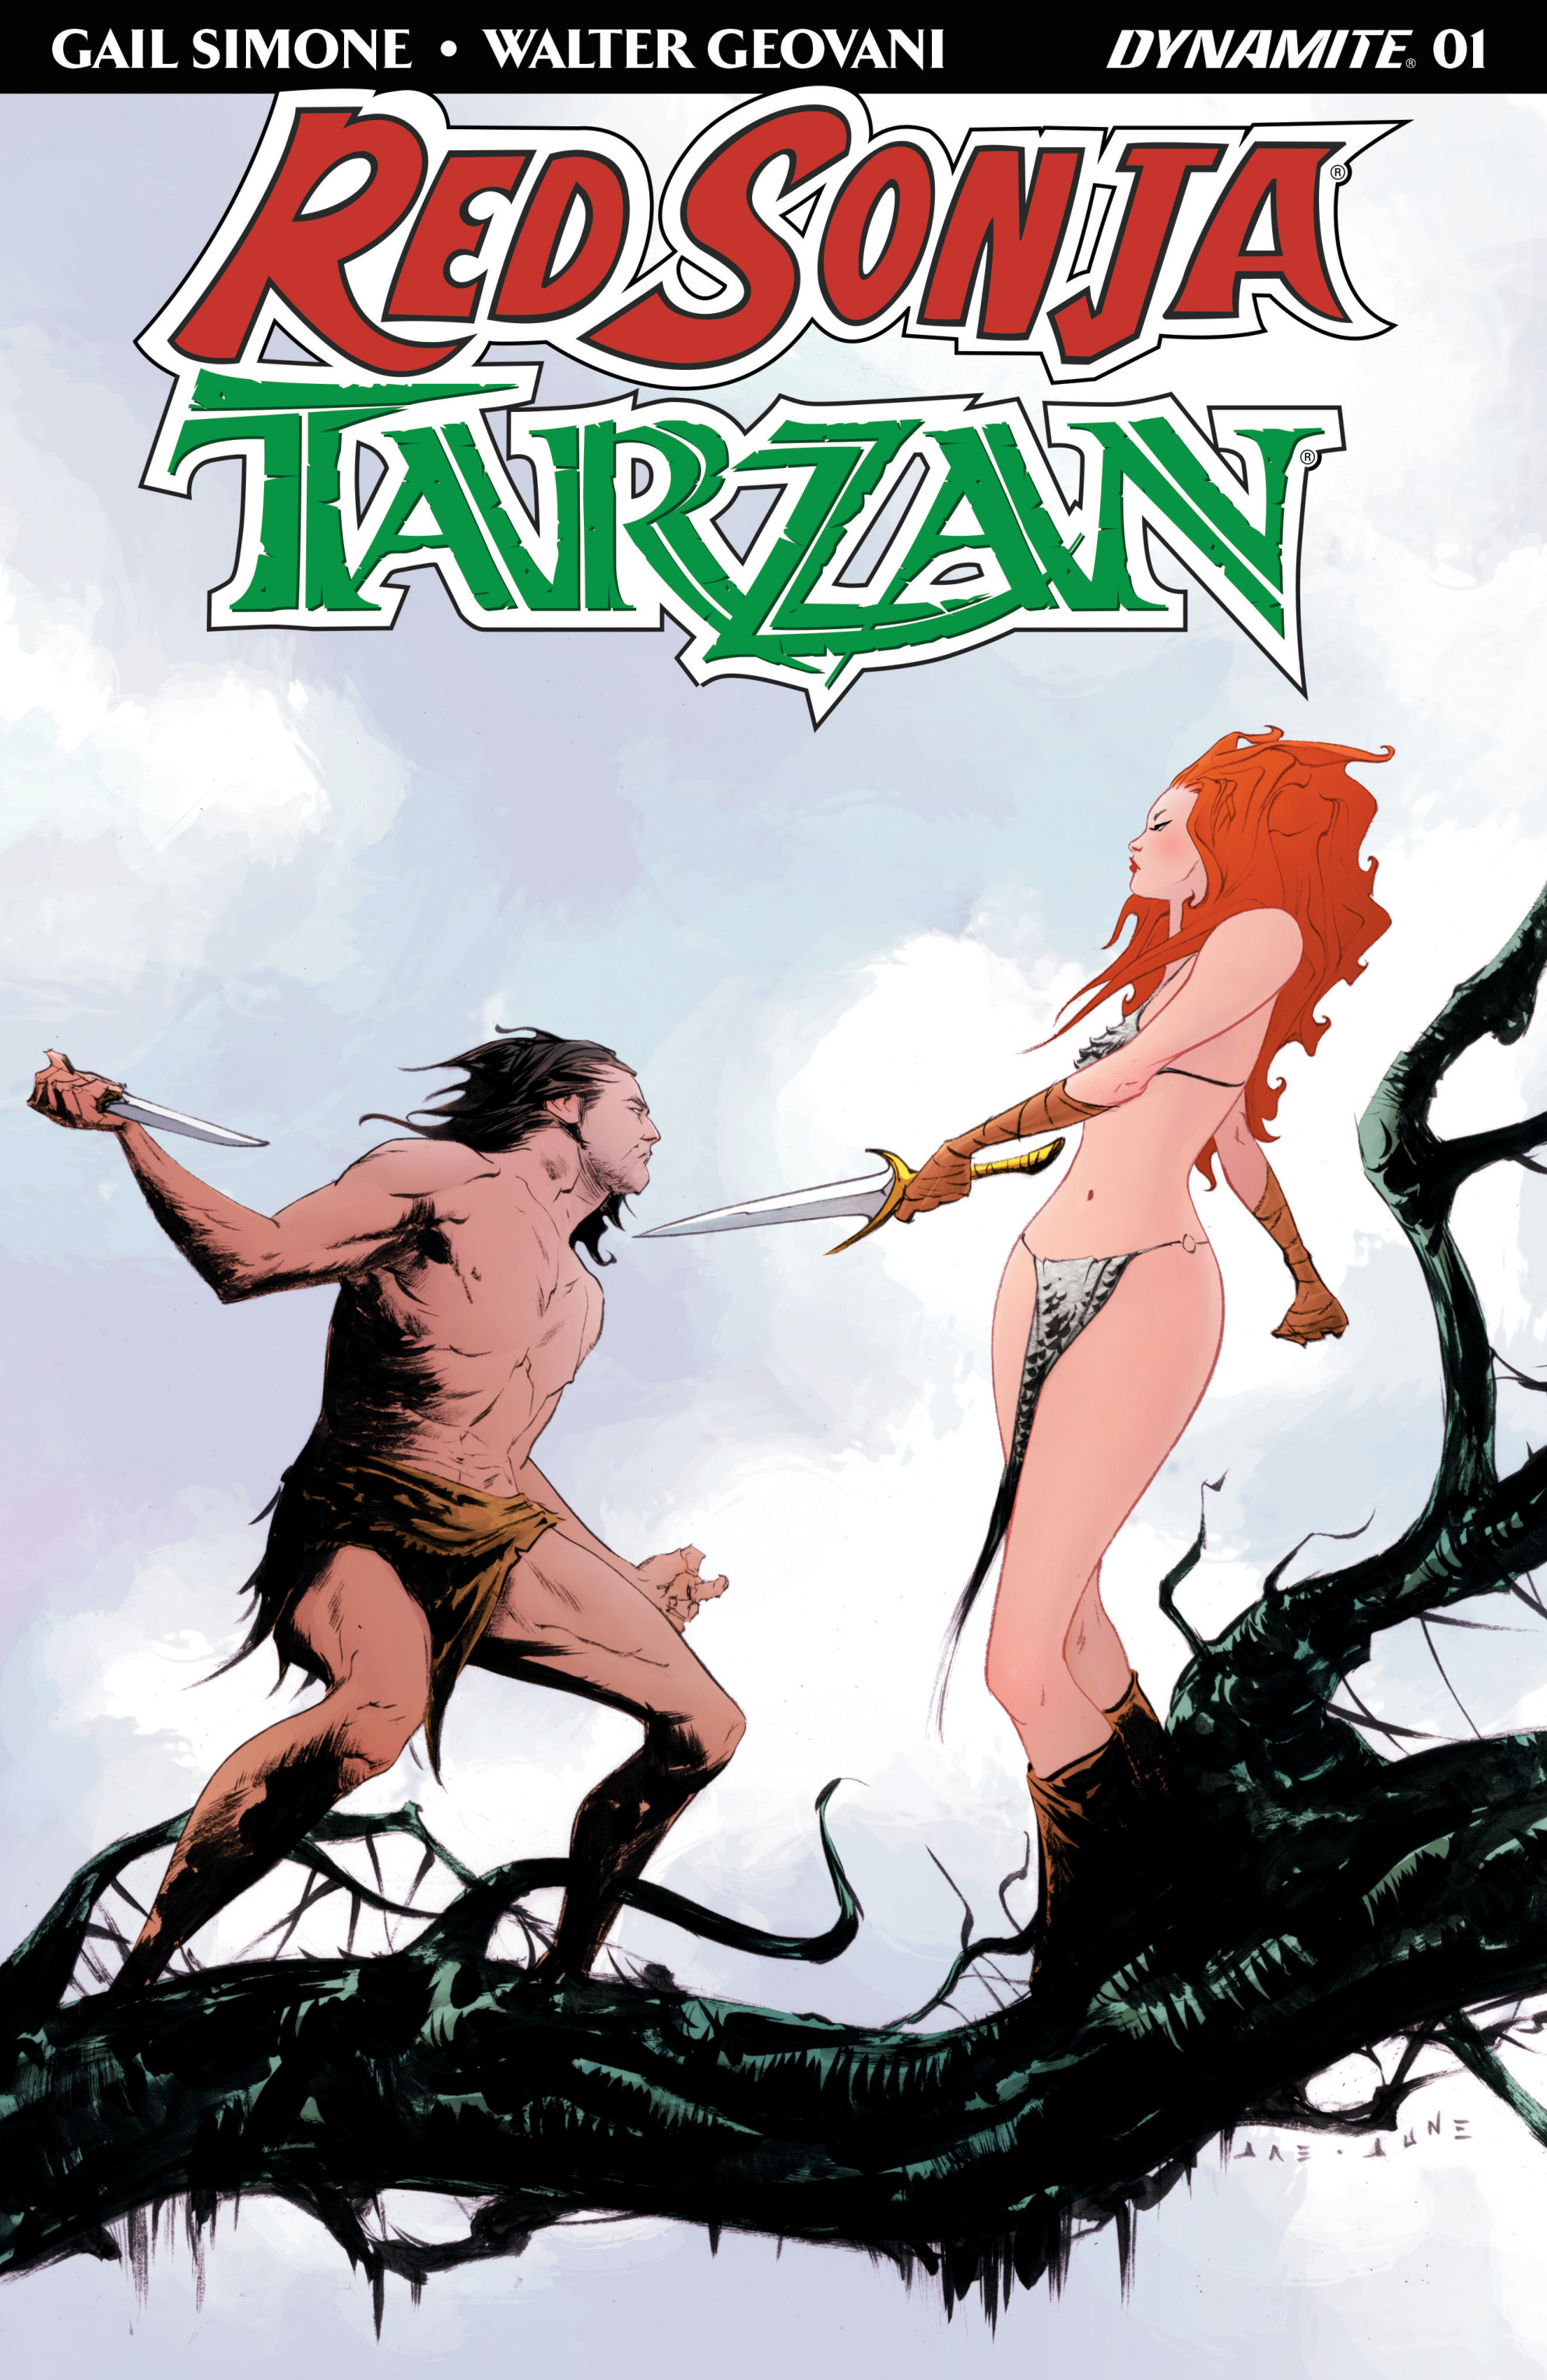 Red Sonja Tarzan 001 001